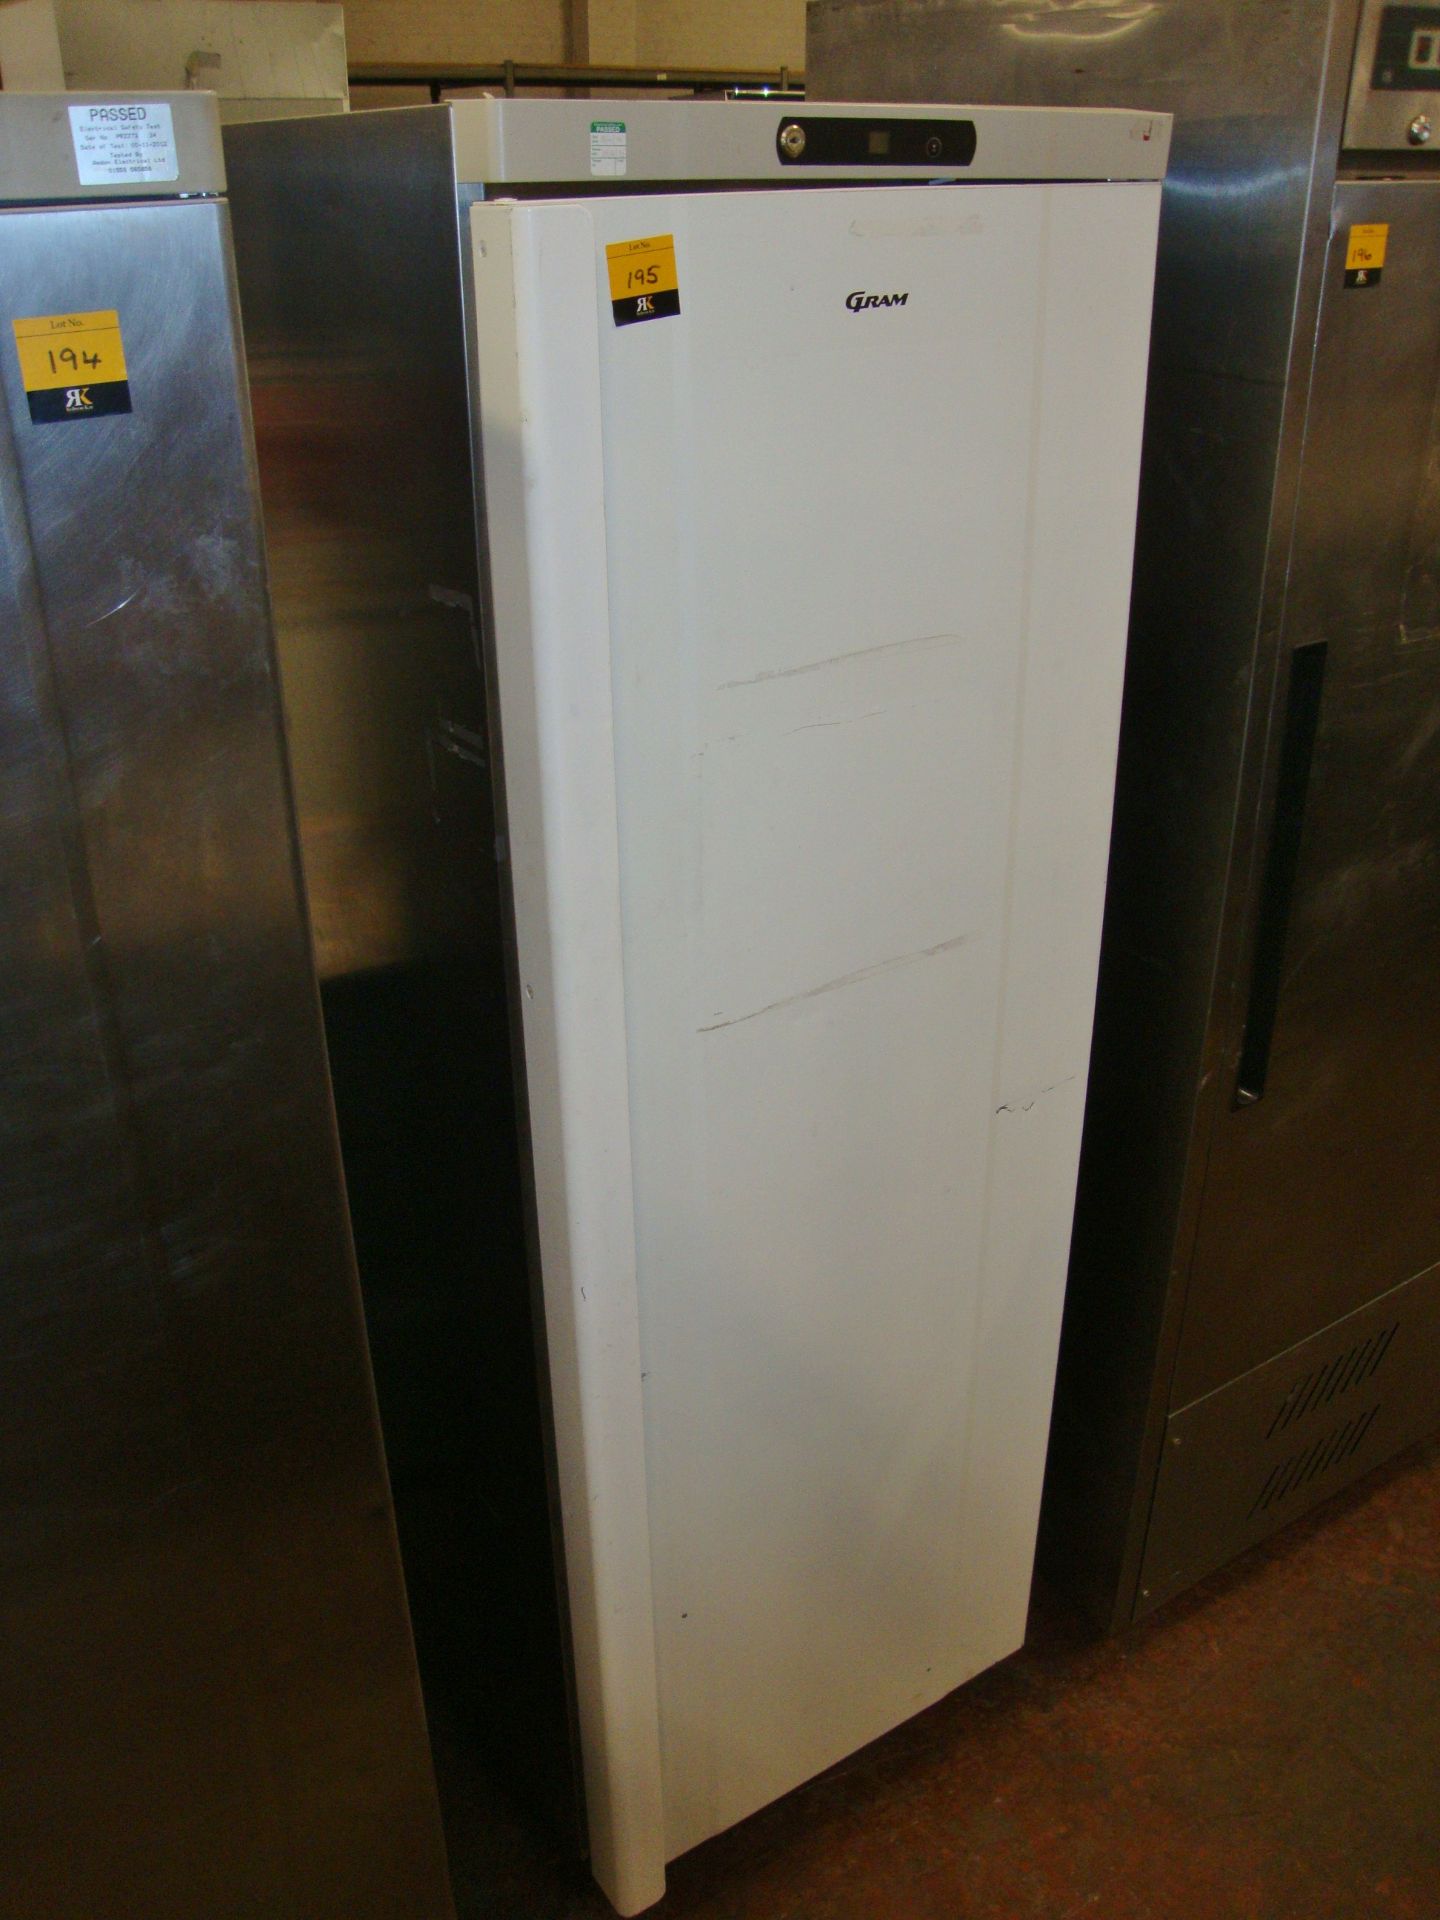 Gram KG400 RUHC6W mobile fridge